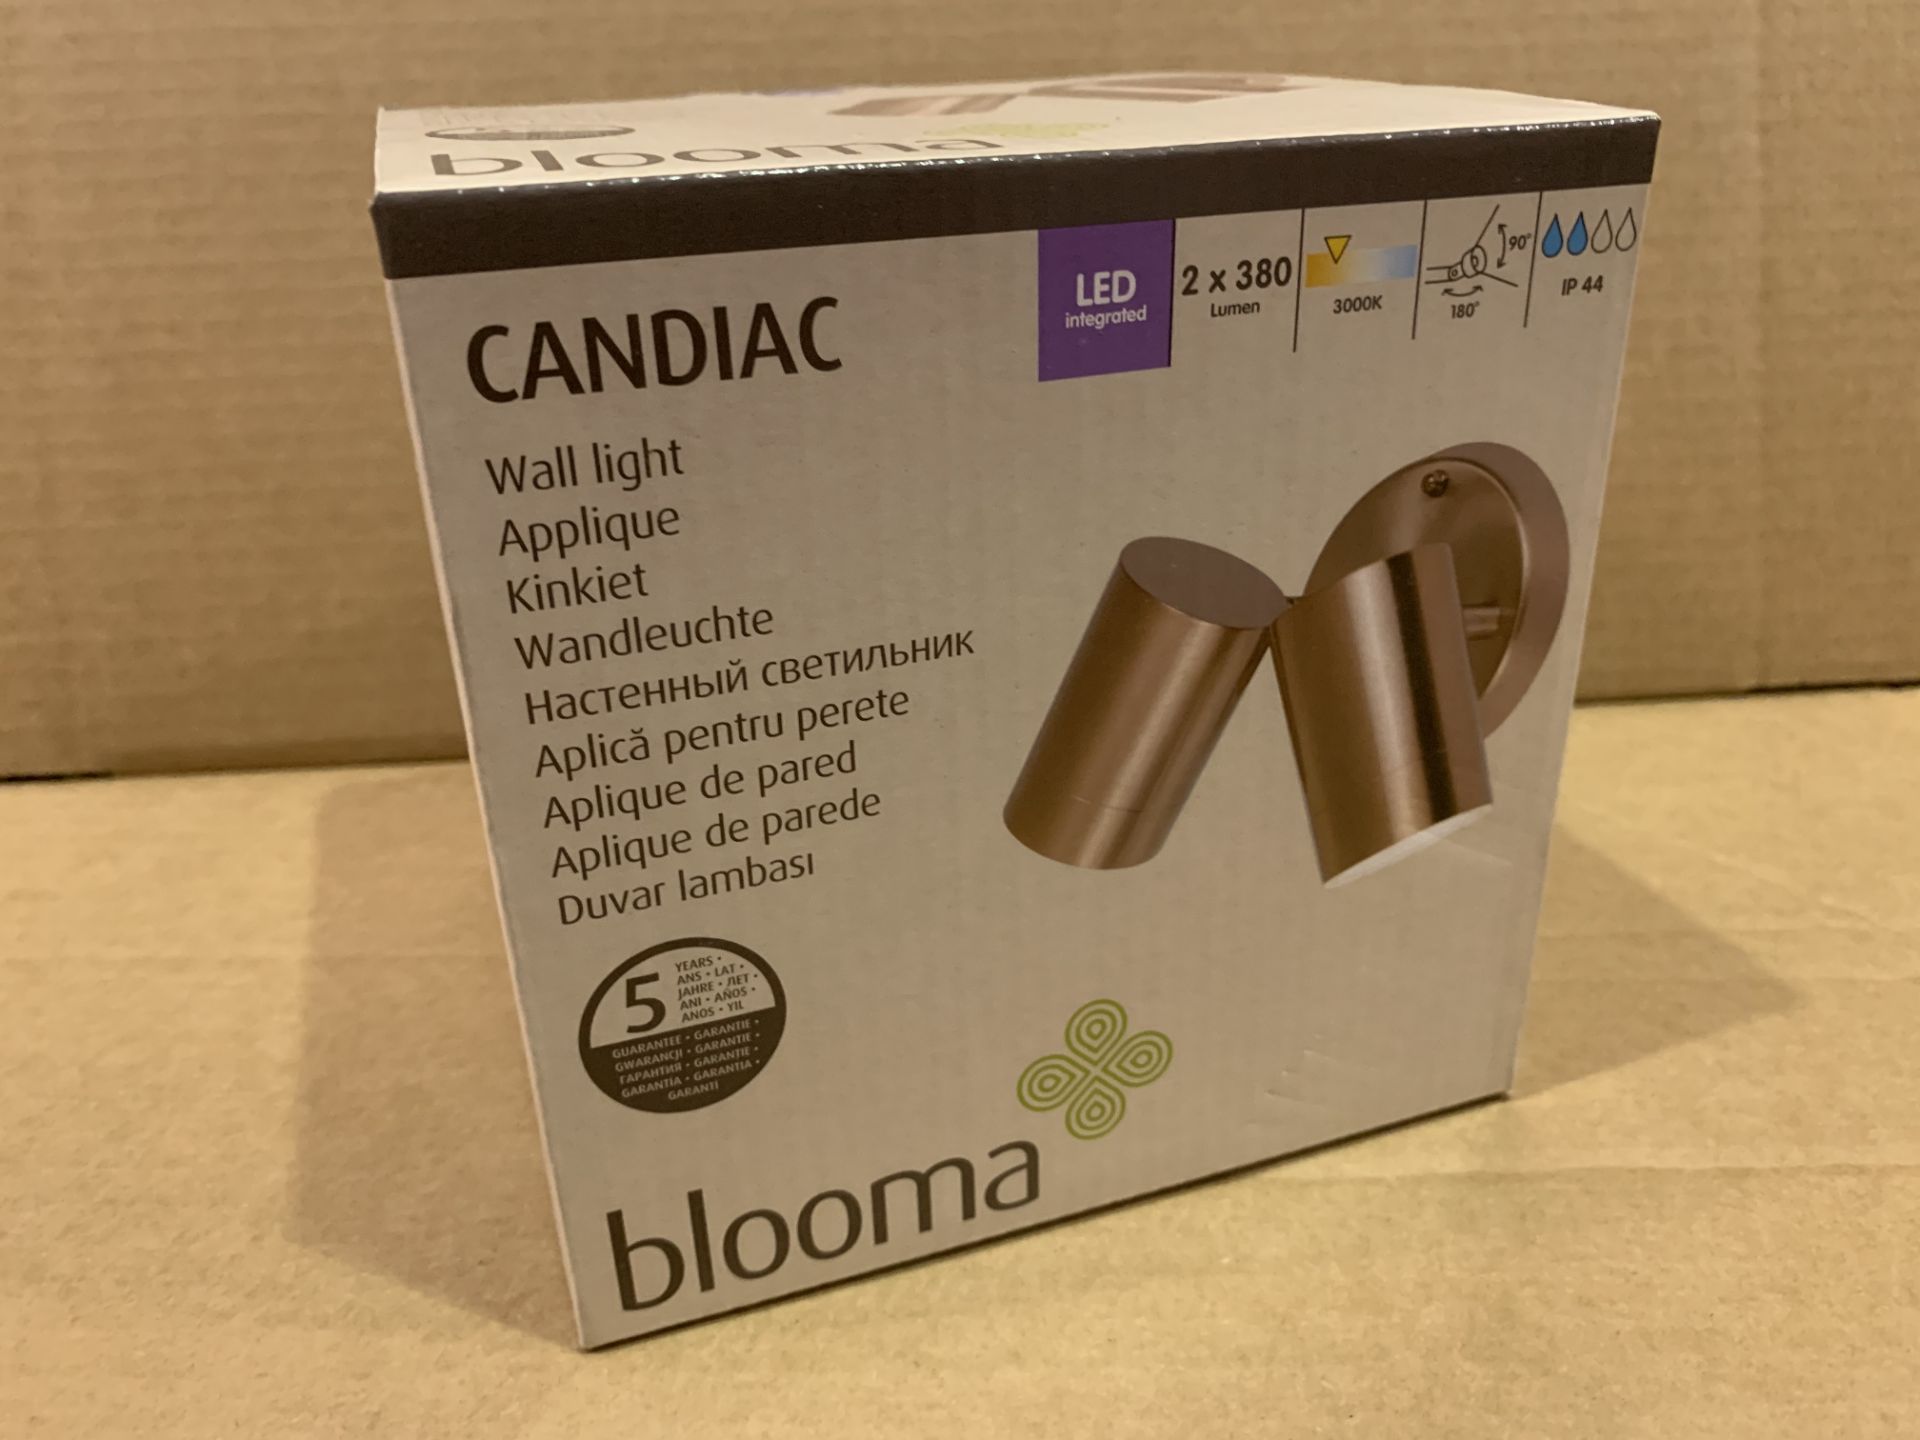 10 X BRAND NEW BLOOMA CANDIAC LED WALL LIGHTS